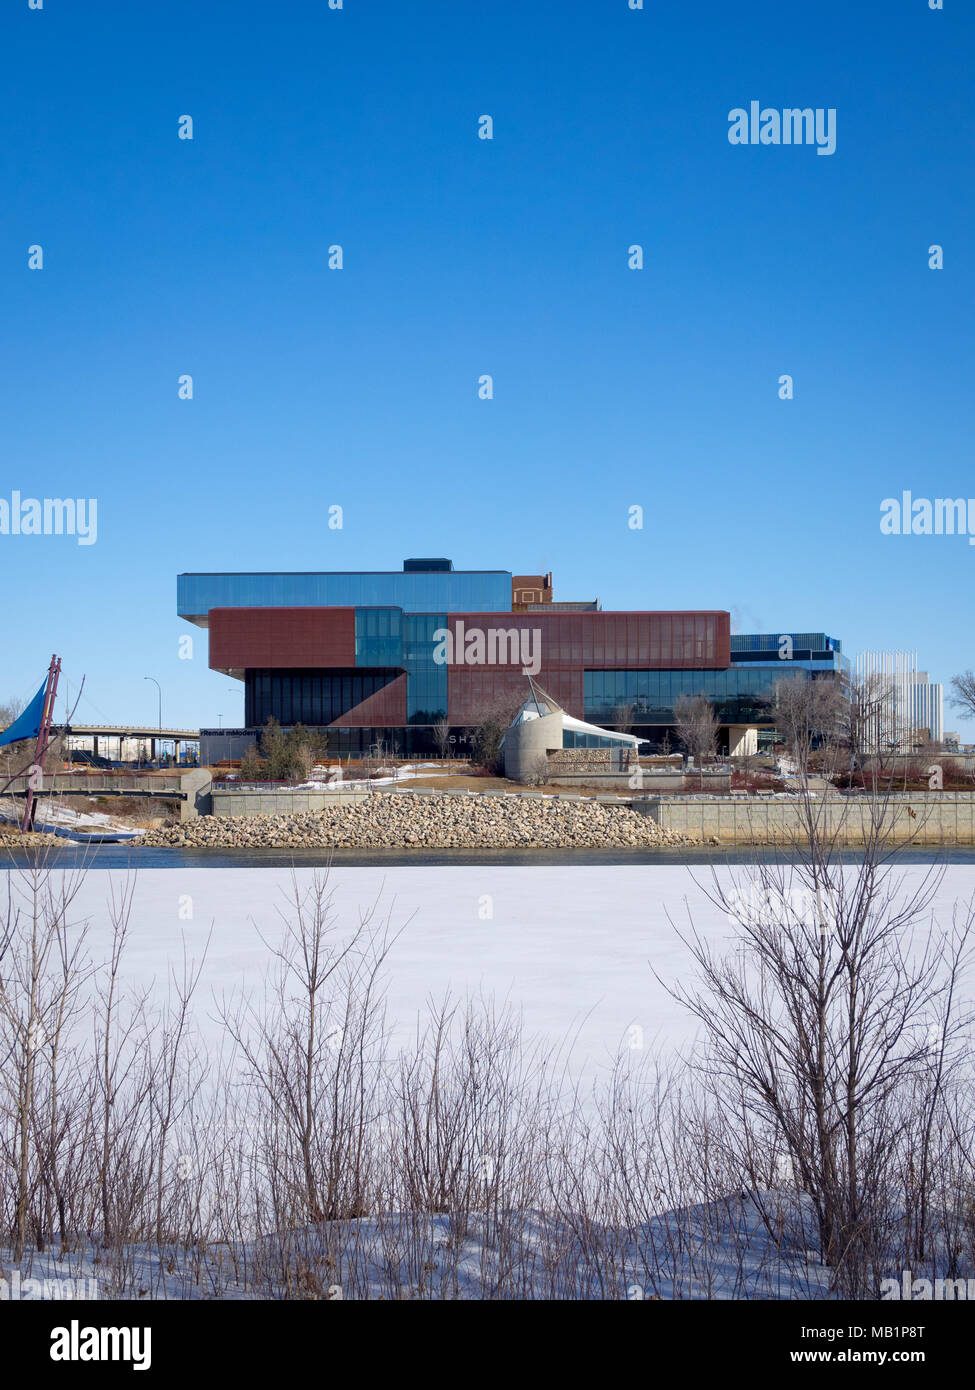 The exterior of the Remai Modern Art Gallery as seen from across the frozen South Saskatchewan River in Saskatoon, Saskatchewan, Canada. Stock Photo